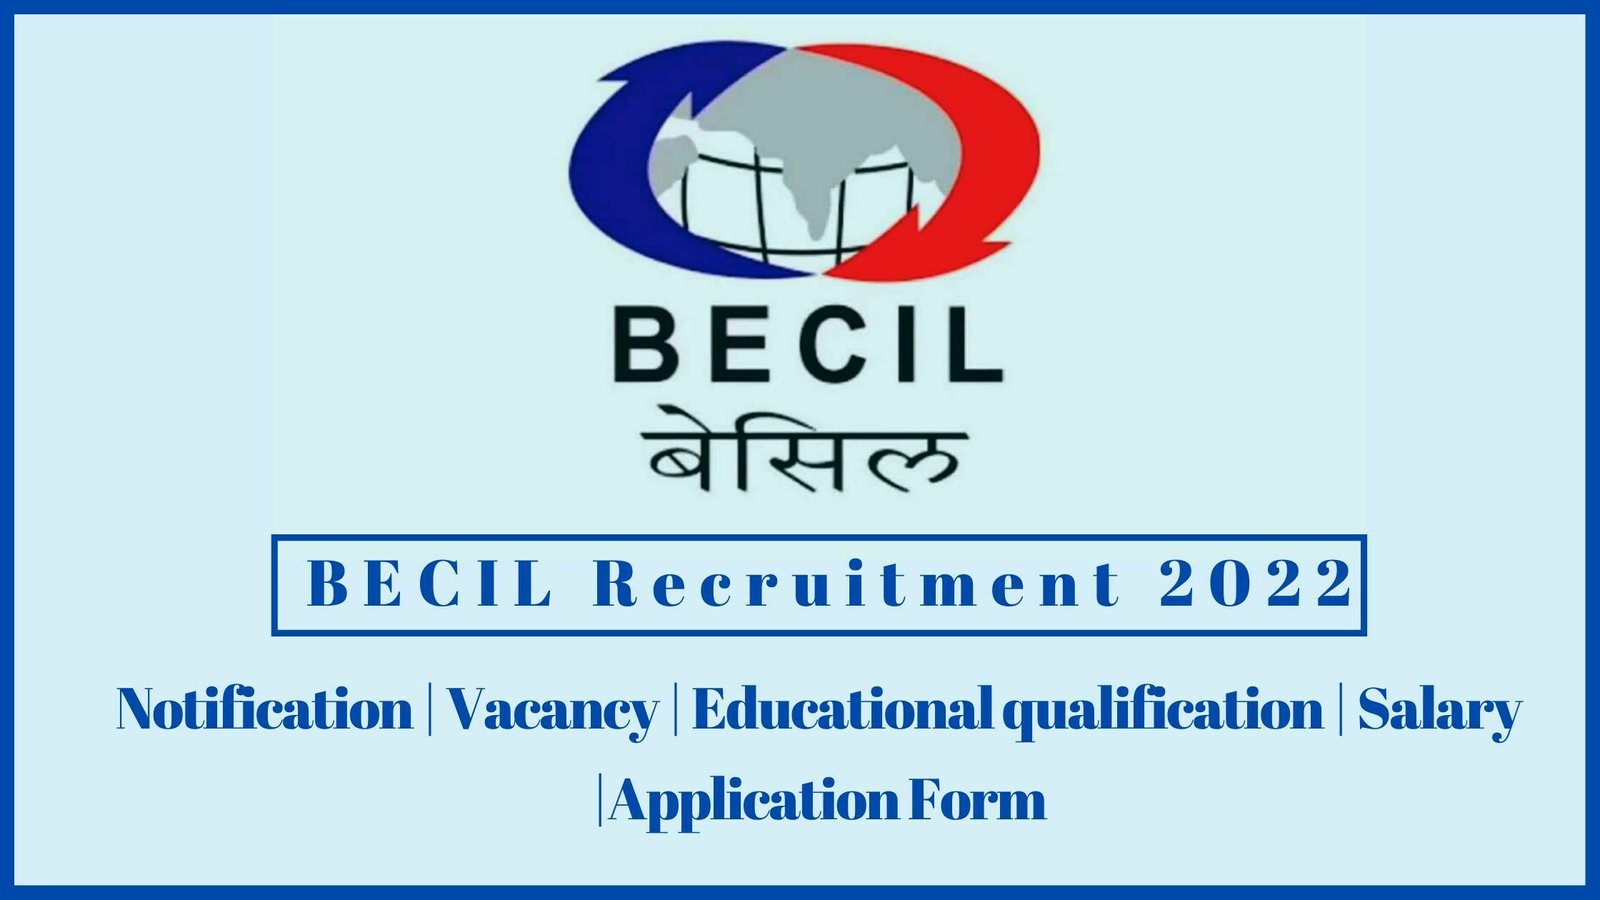 becil recruitment 2022 in tamil